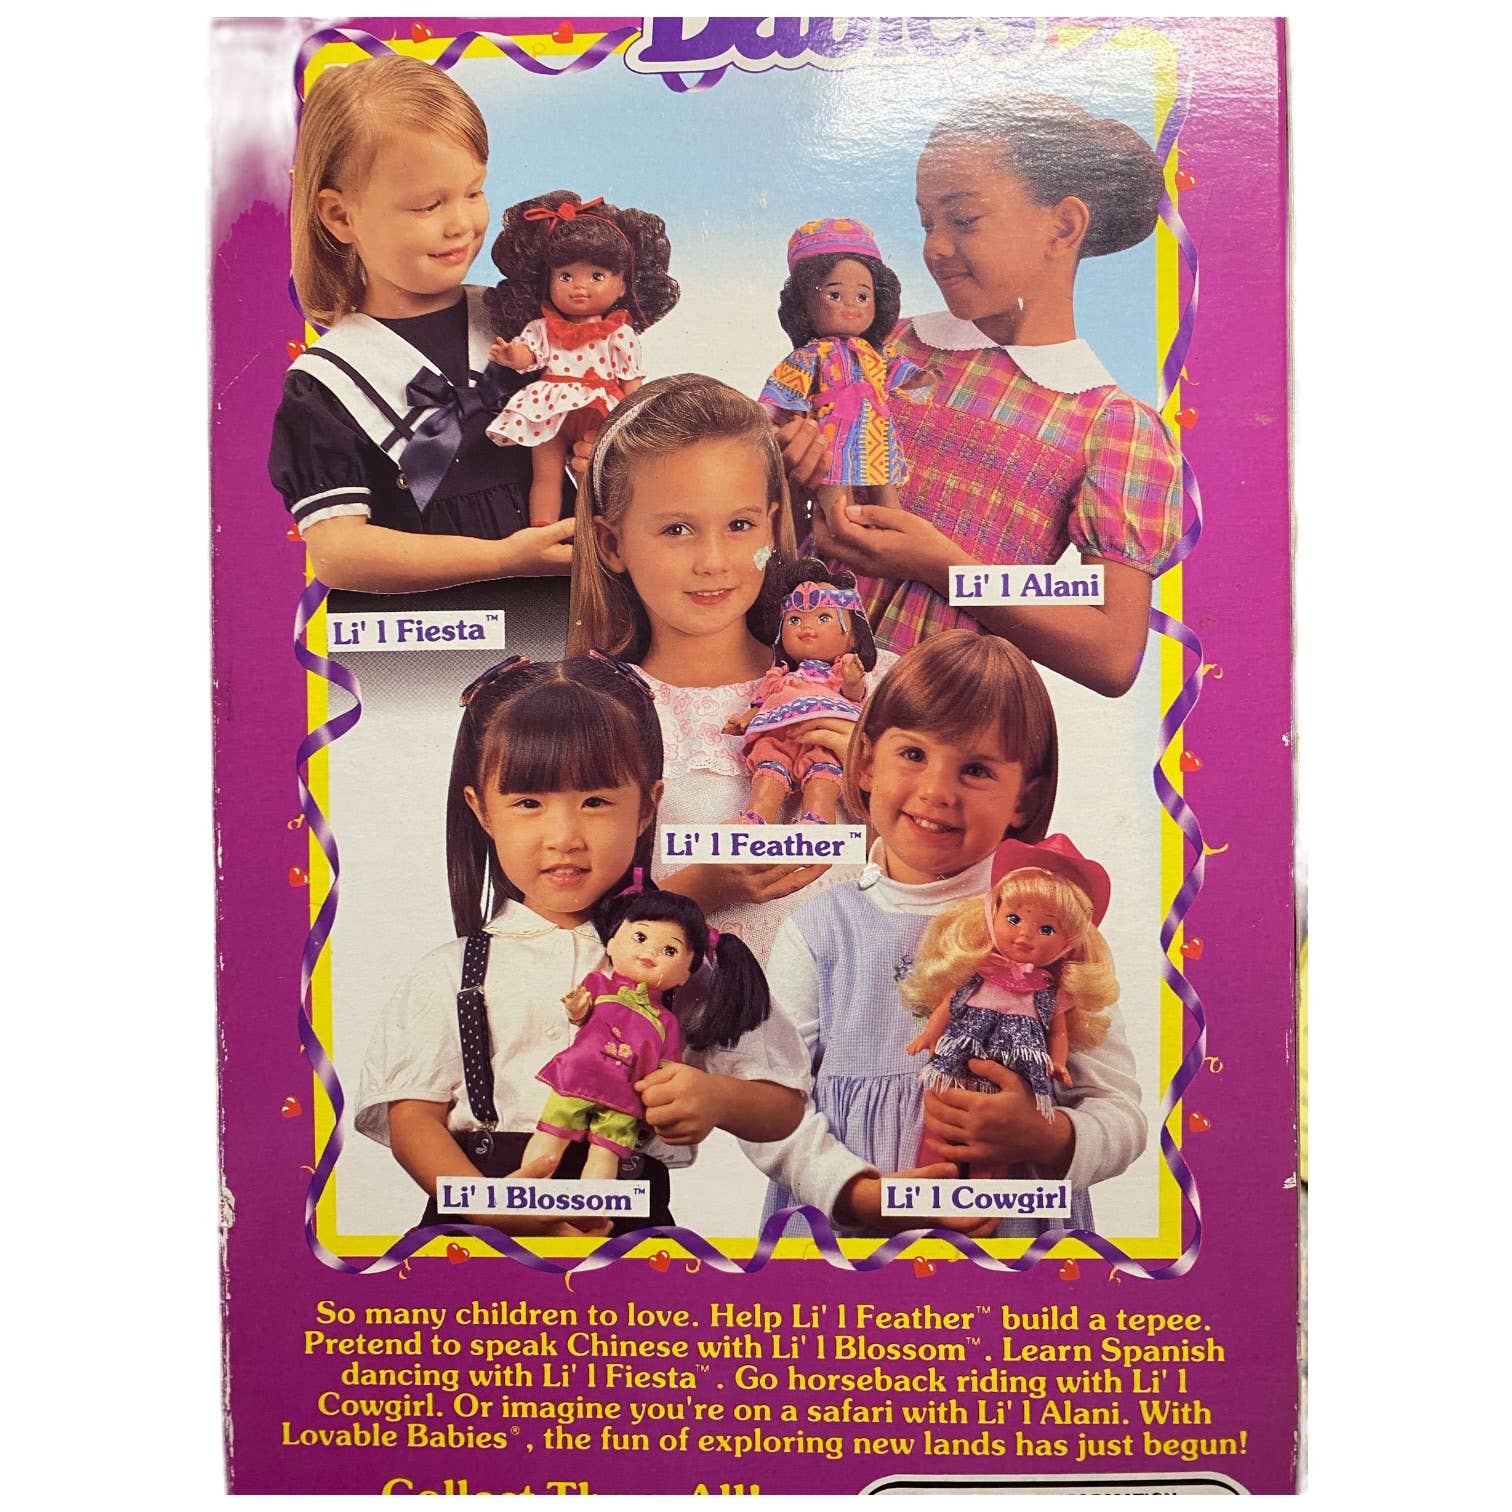 VTG 1993 Mattel Lovable Babies Li’l Alani Safari Tribal Girl Doll in Outfit NEW